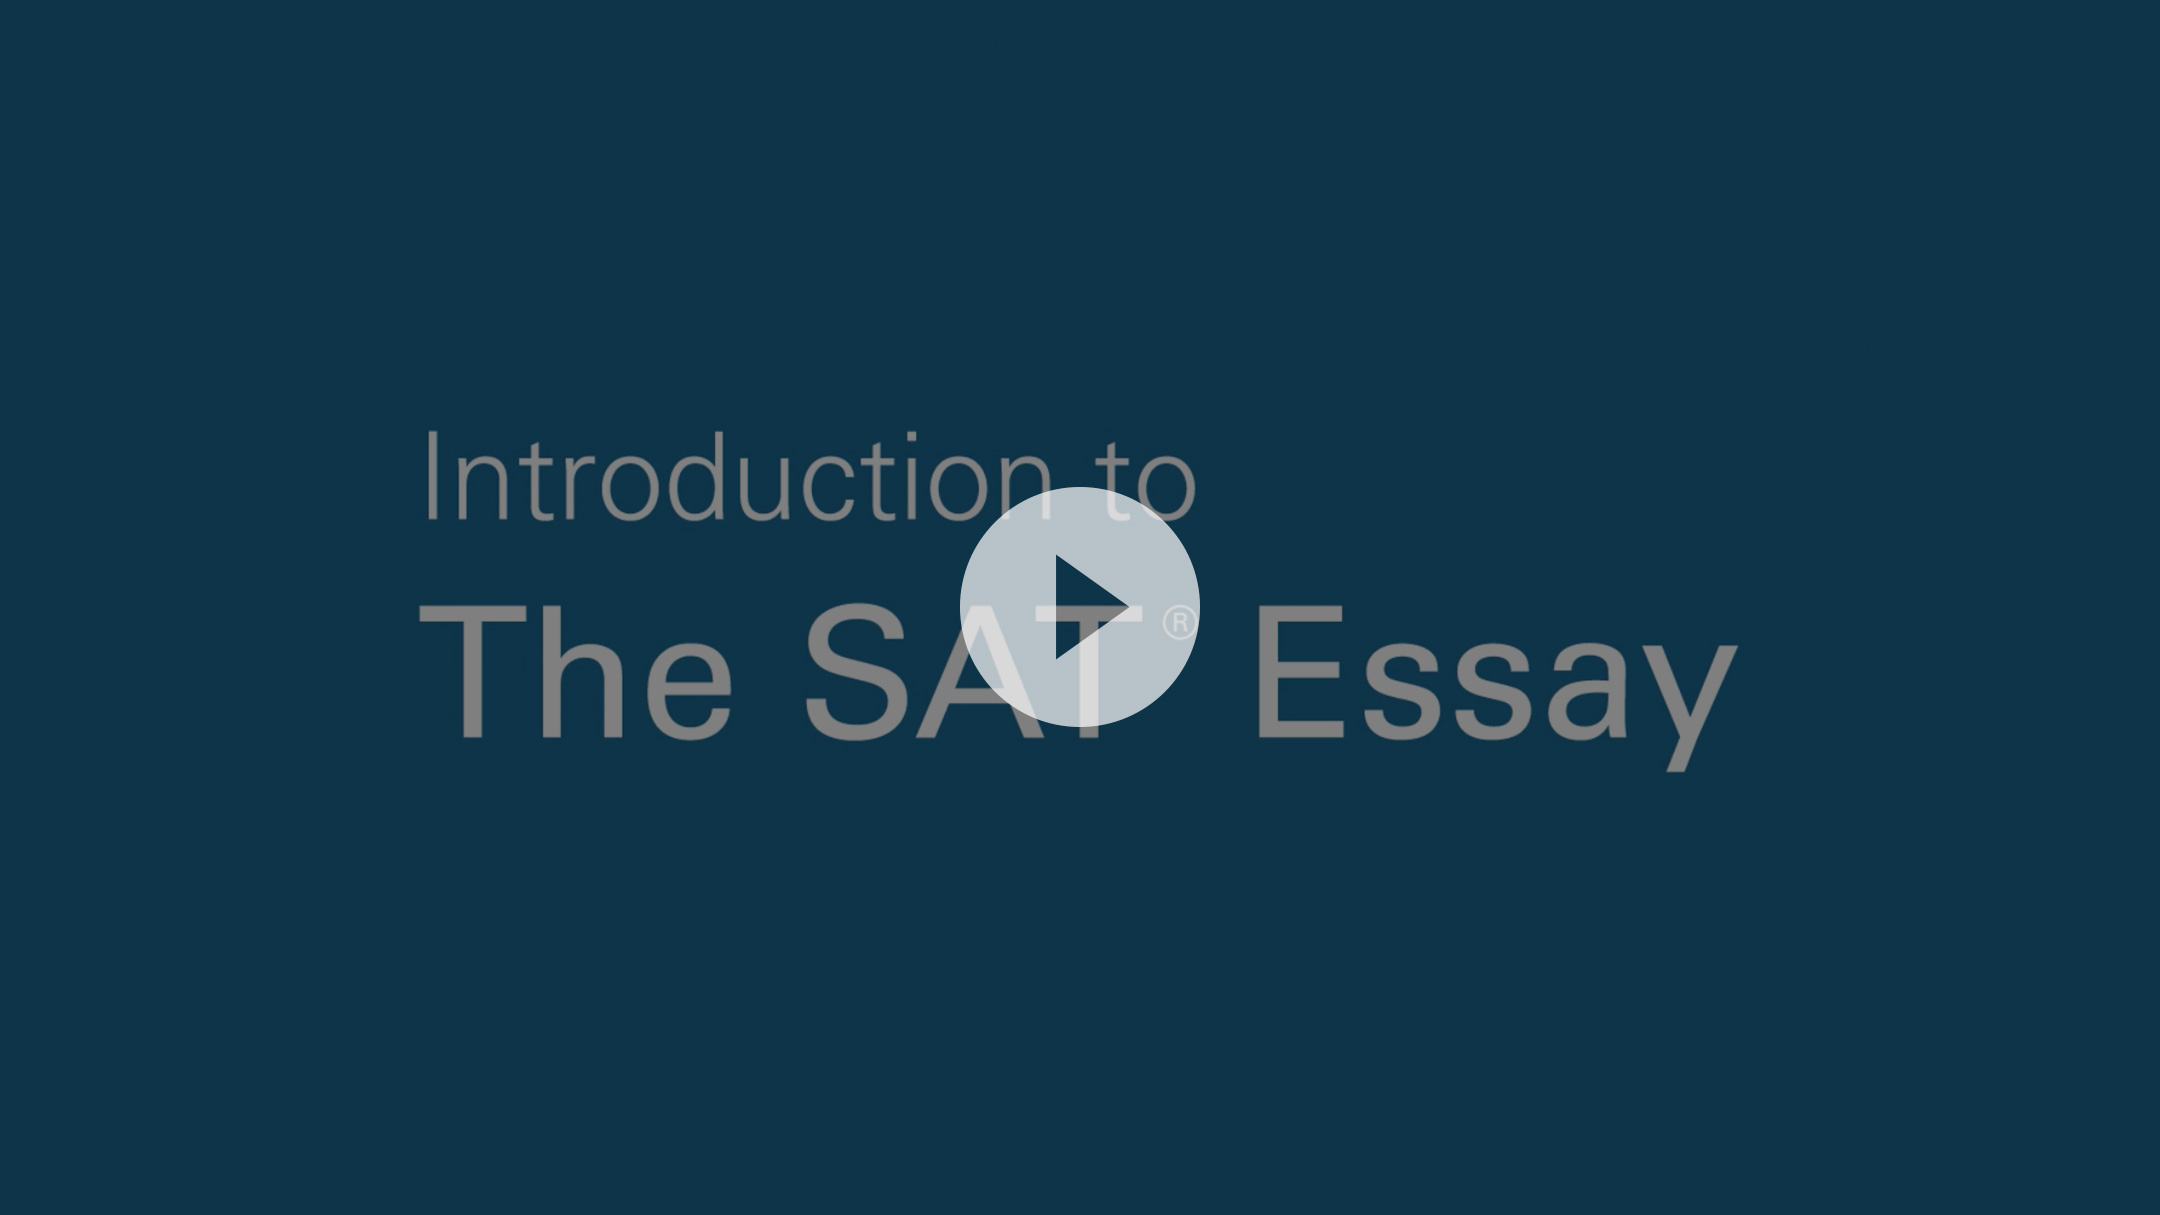 new sat essay help